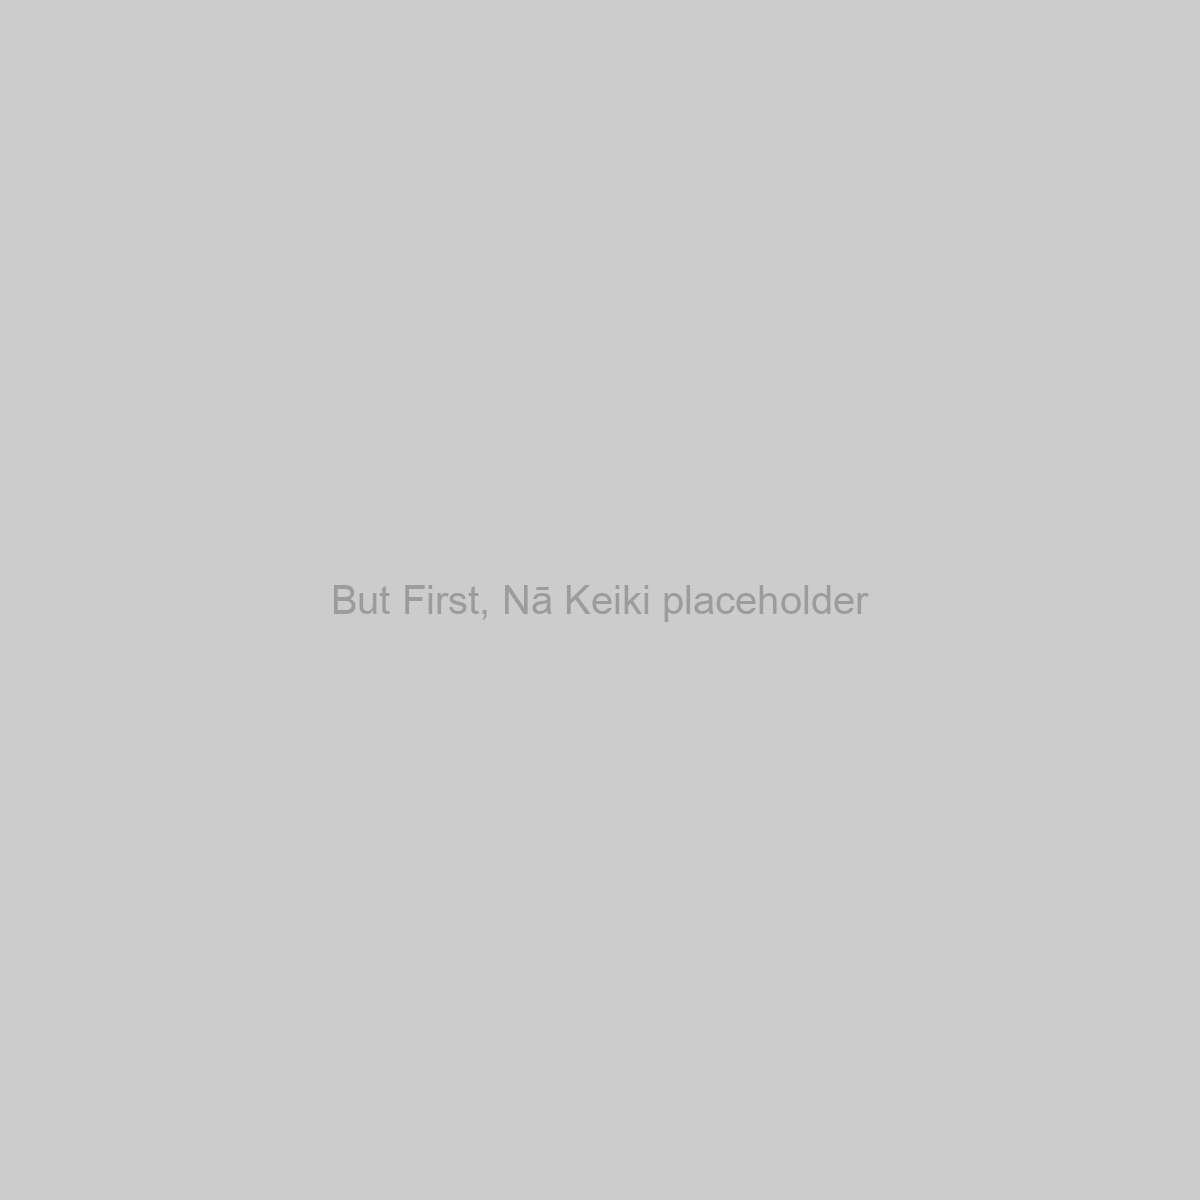 But First, Nā Keiki Placeholder Image